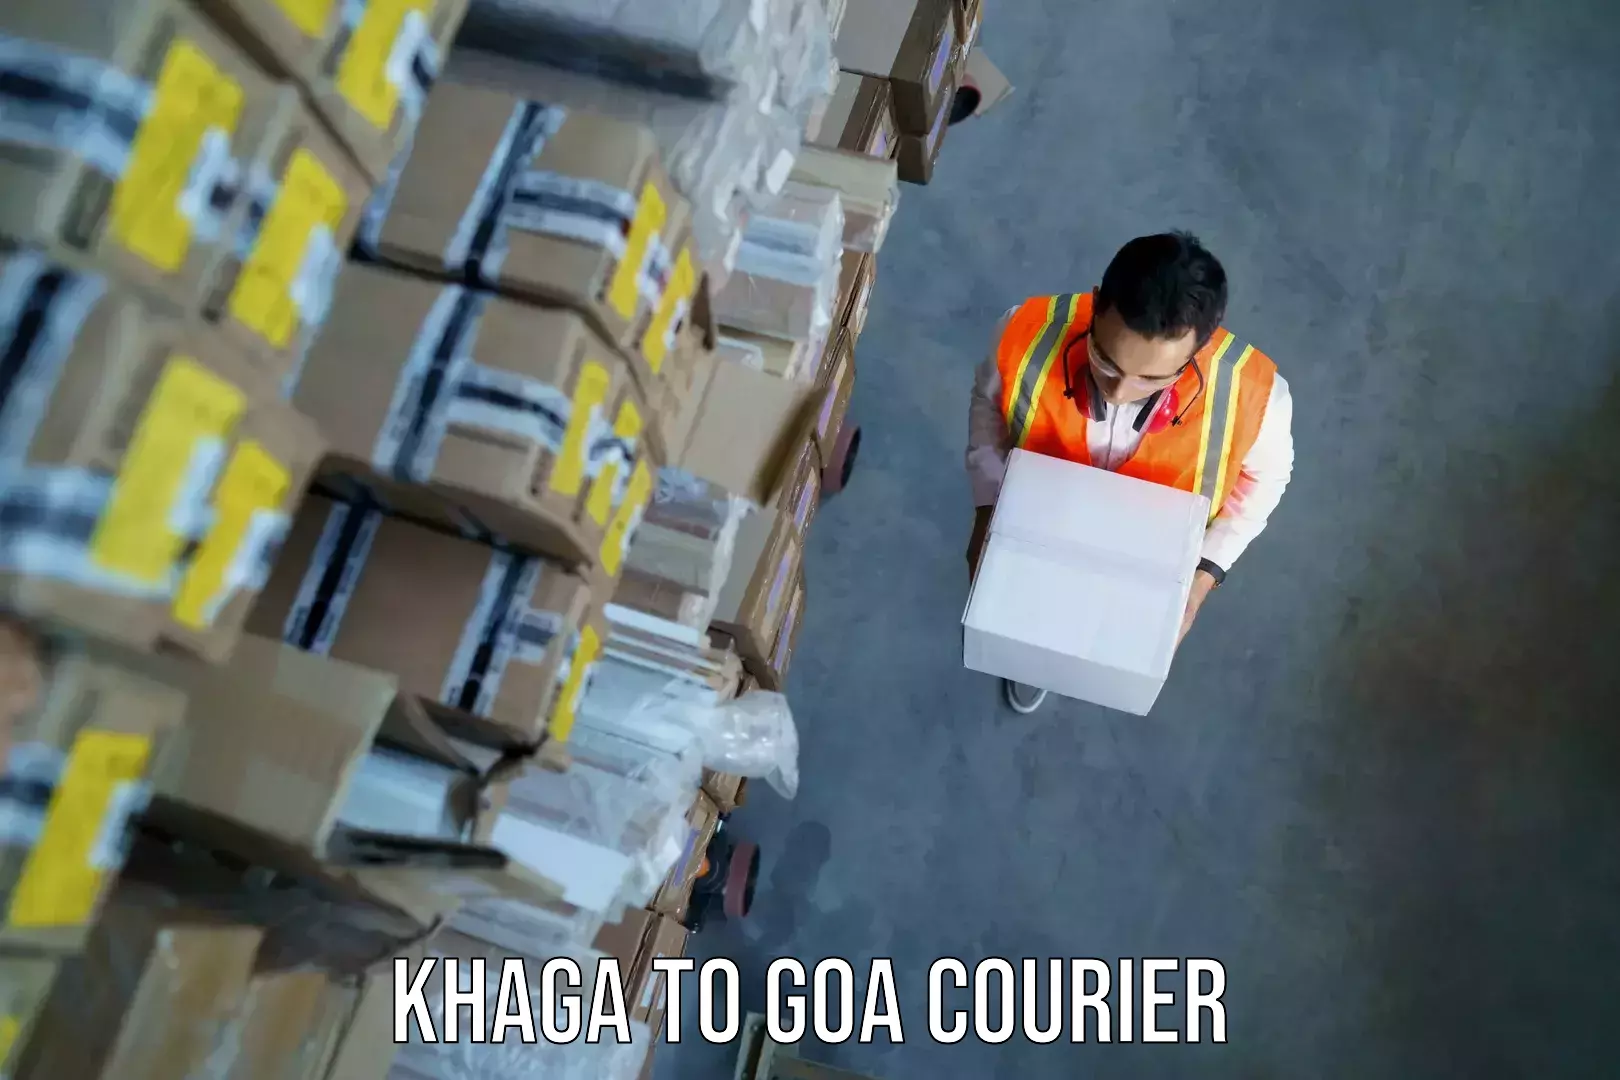 Baggage transport network Khaga to Goa